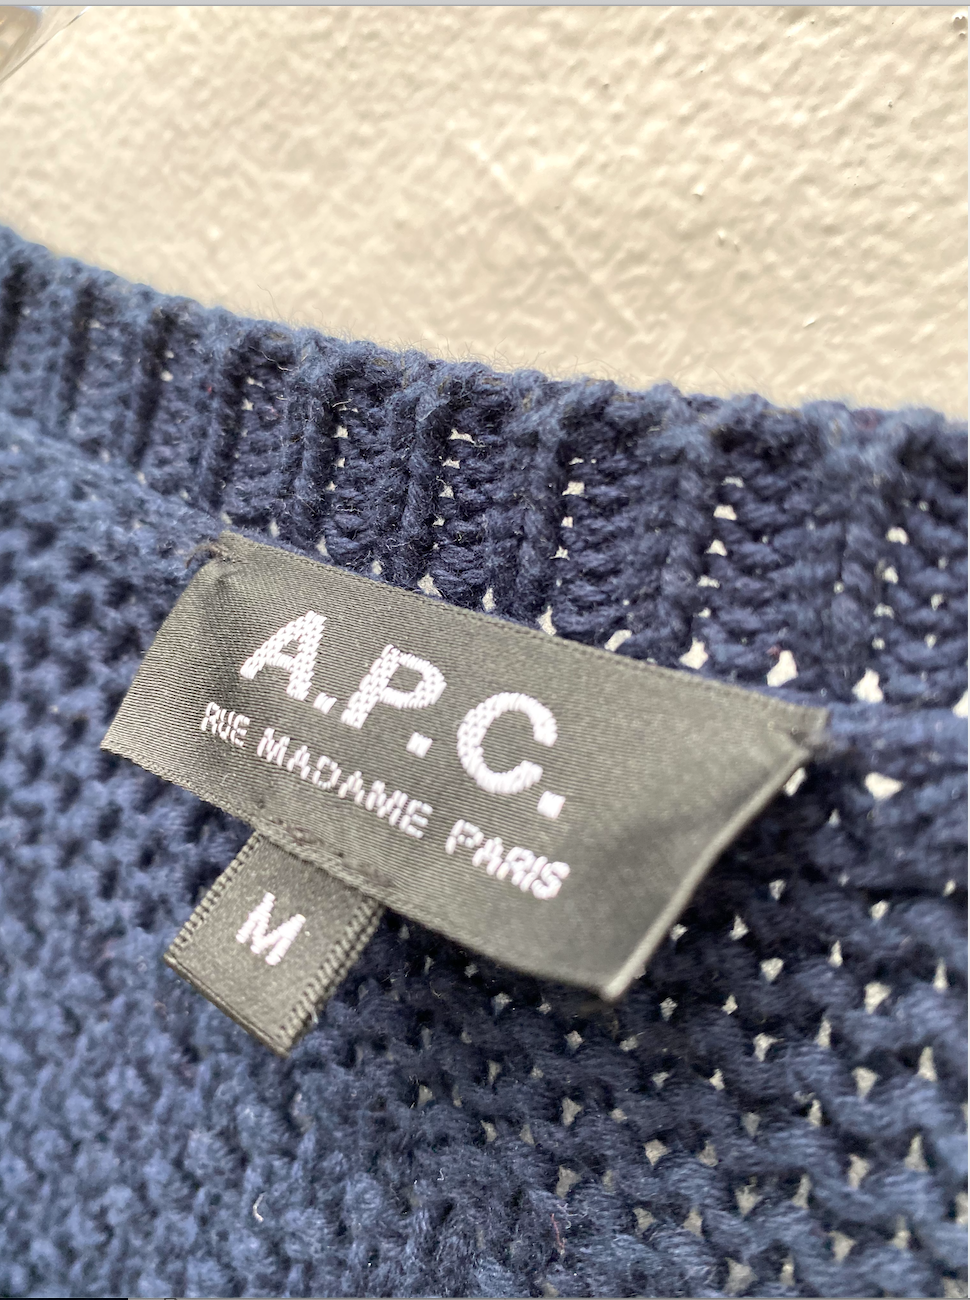 A.P.C. Navy Cotton Sweater Size M